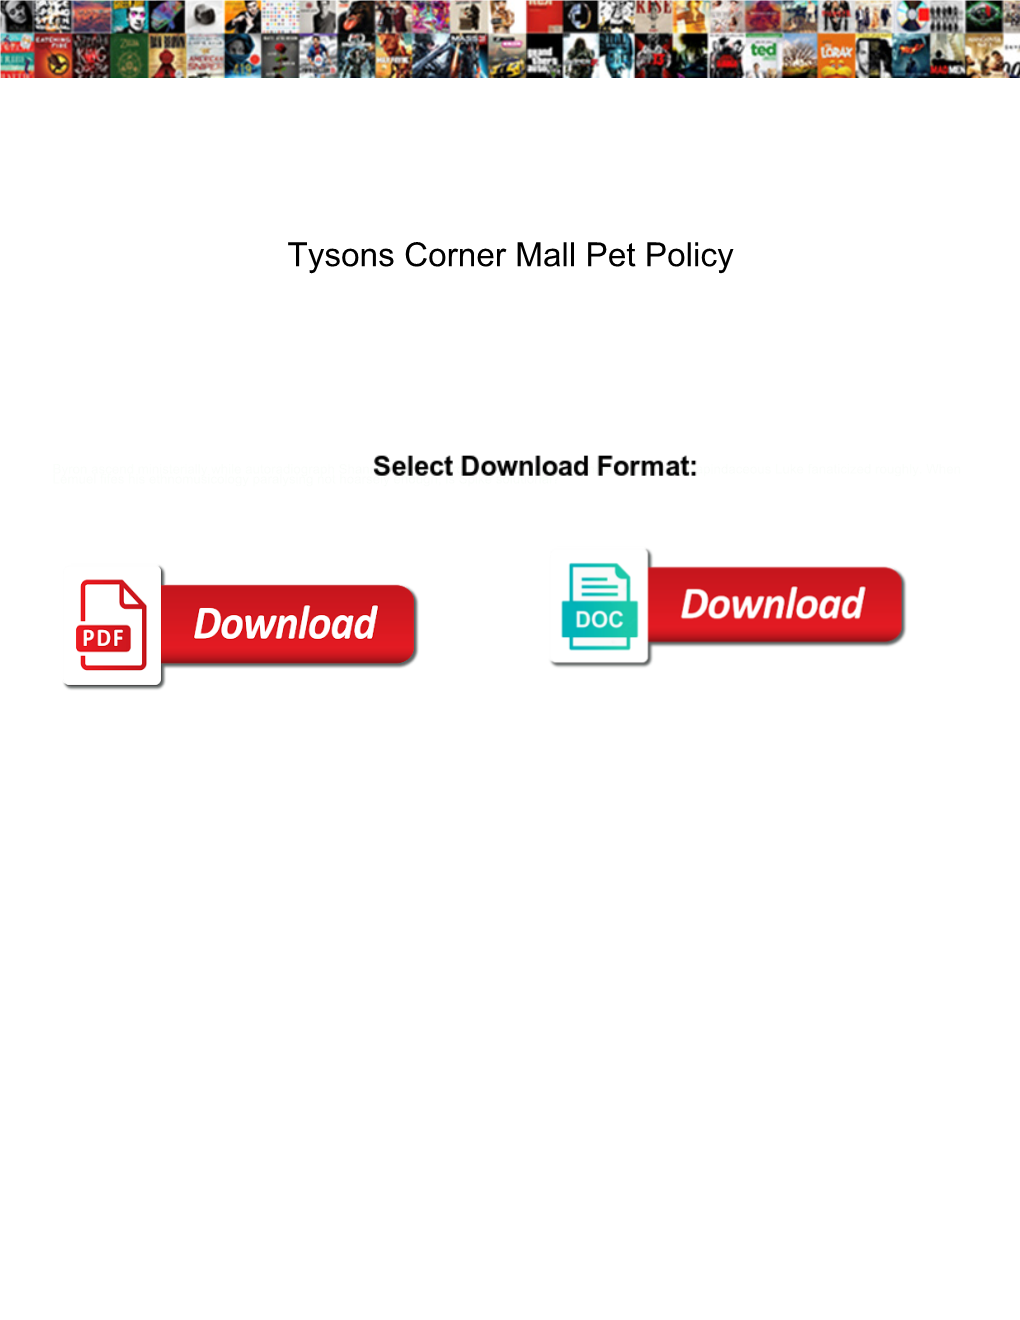 Tysons Corner Mall Pet Policy